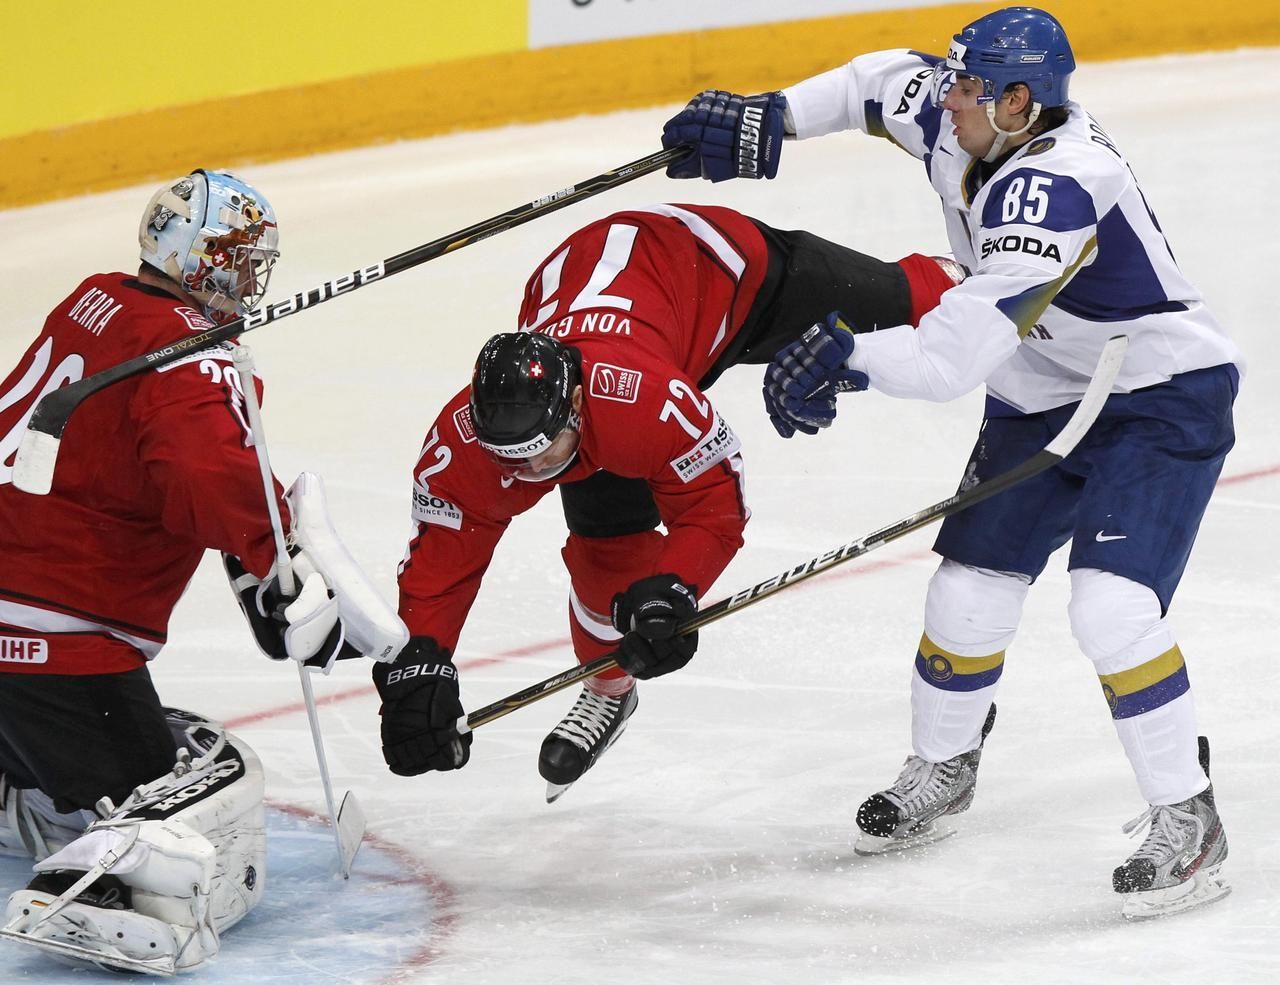 Konstantin Romanov, Reto Berra a Patrick von Gunten v utkání MS v hokeji 2012 Švýcarsko - Kazachstán